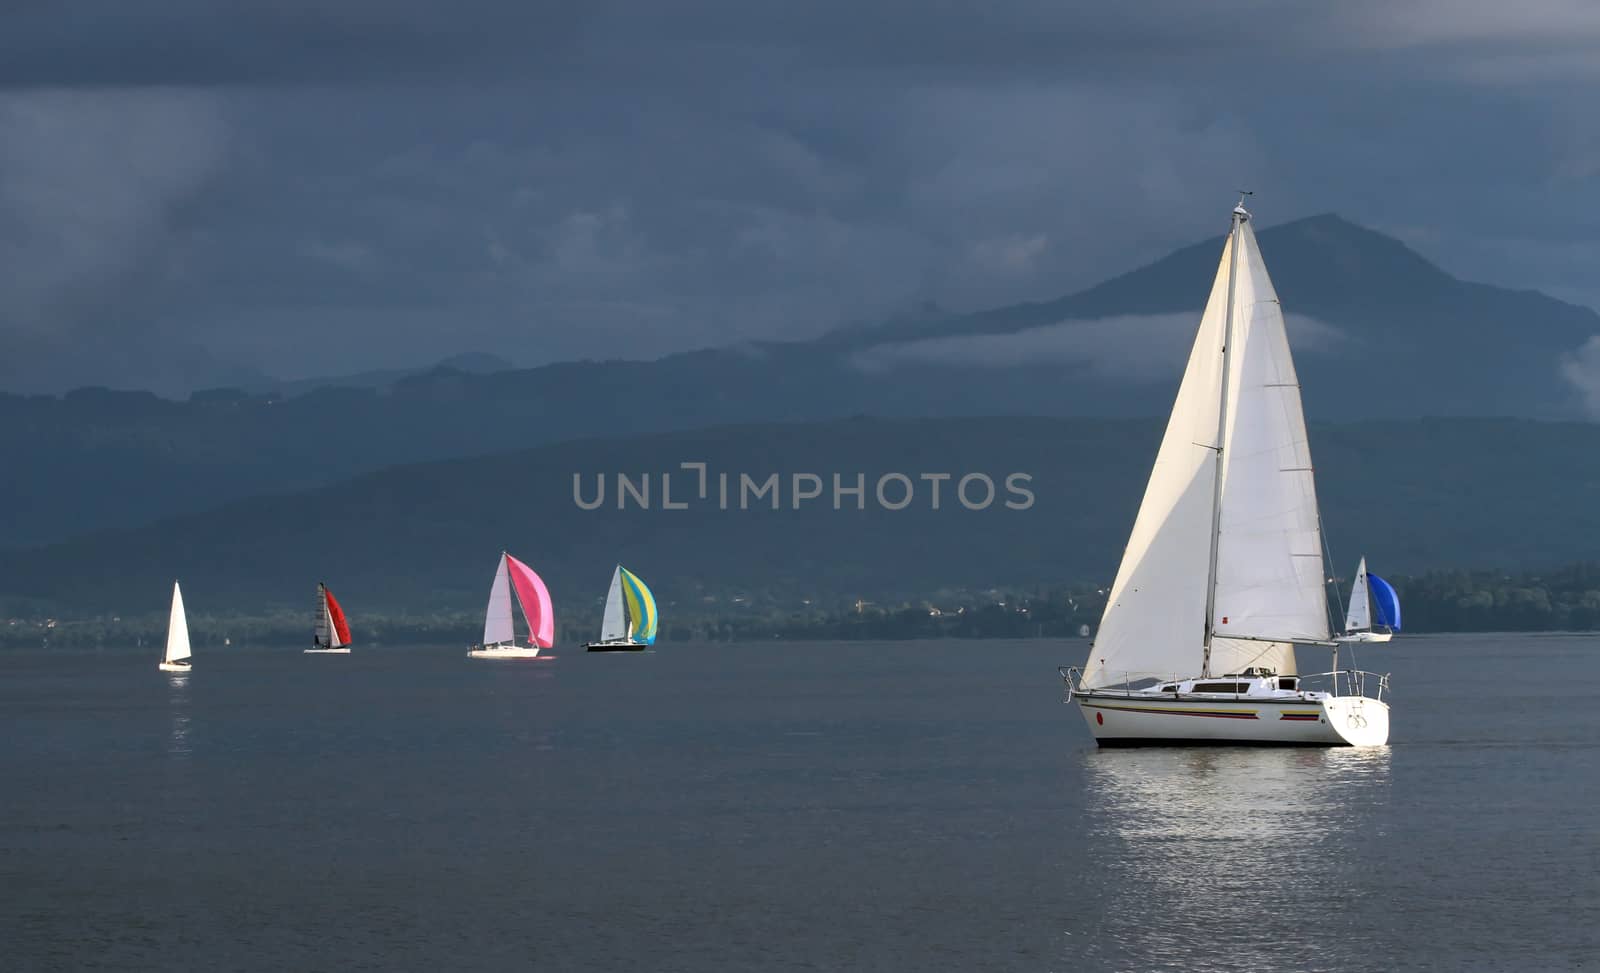 Sailing boats by stormy weather, Geneva lake, Switzerland by Elenaphotos21